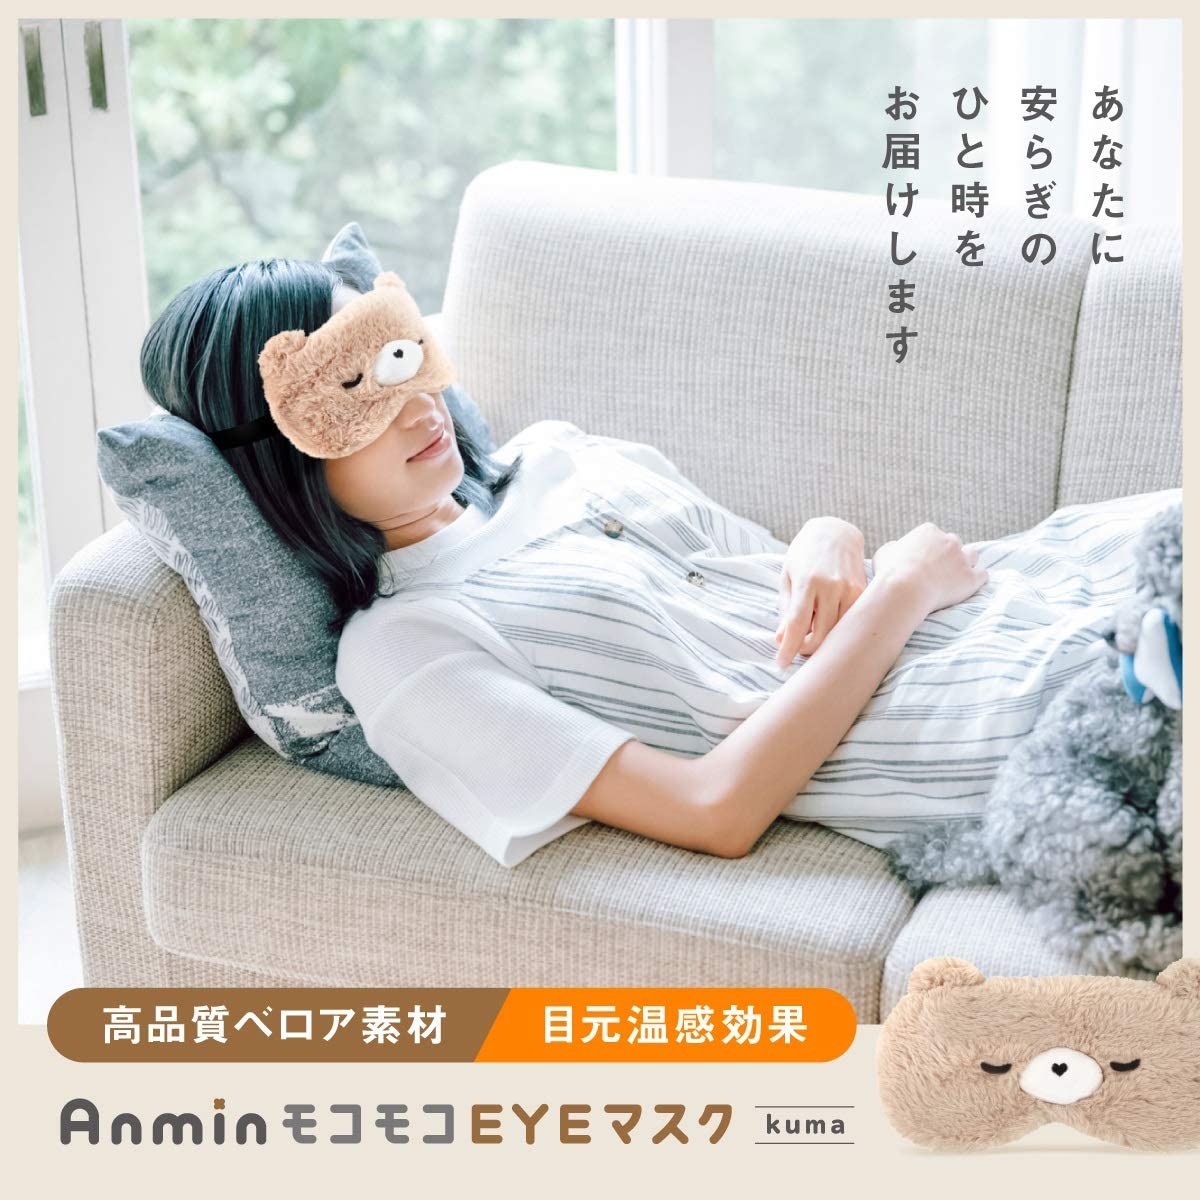 Anmin(アンミン) モコモコ ホットアイマスクの商品画像サムネ3 